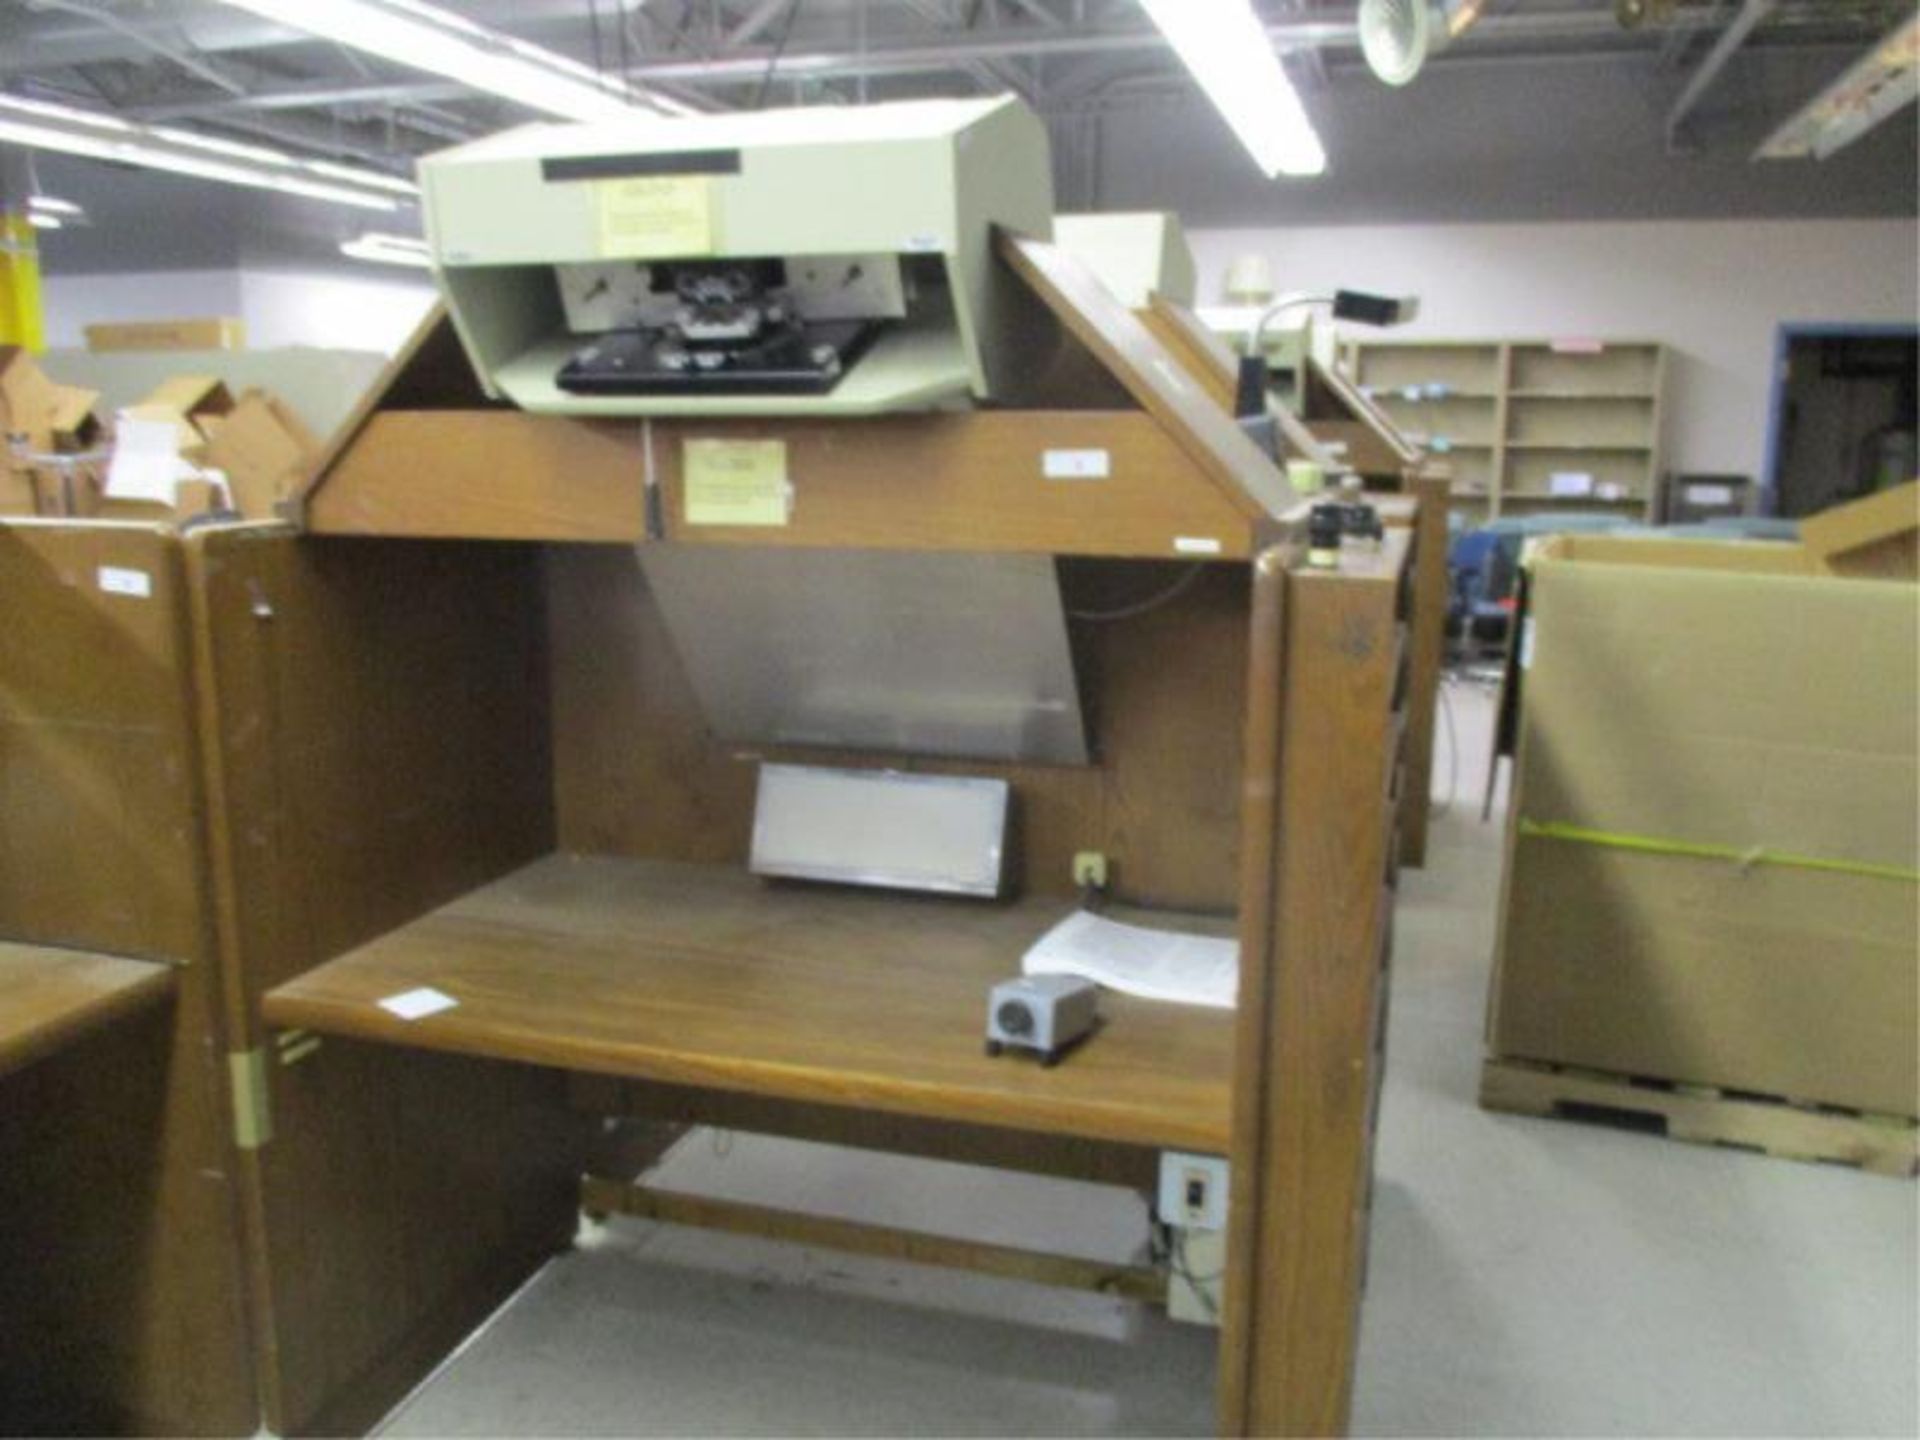 Northwest Microfilm NMI 2020 w/ Desk & Light Box